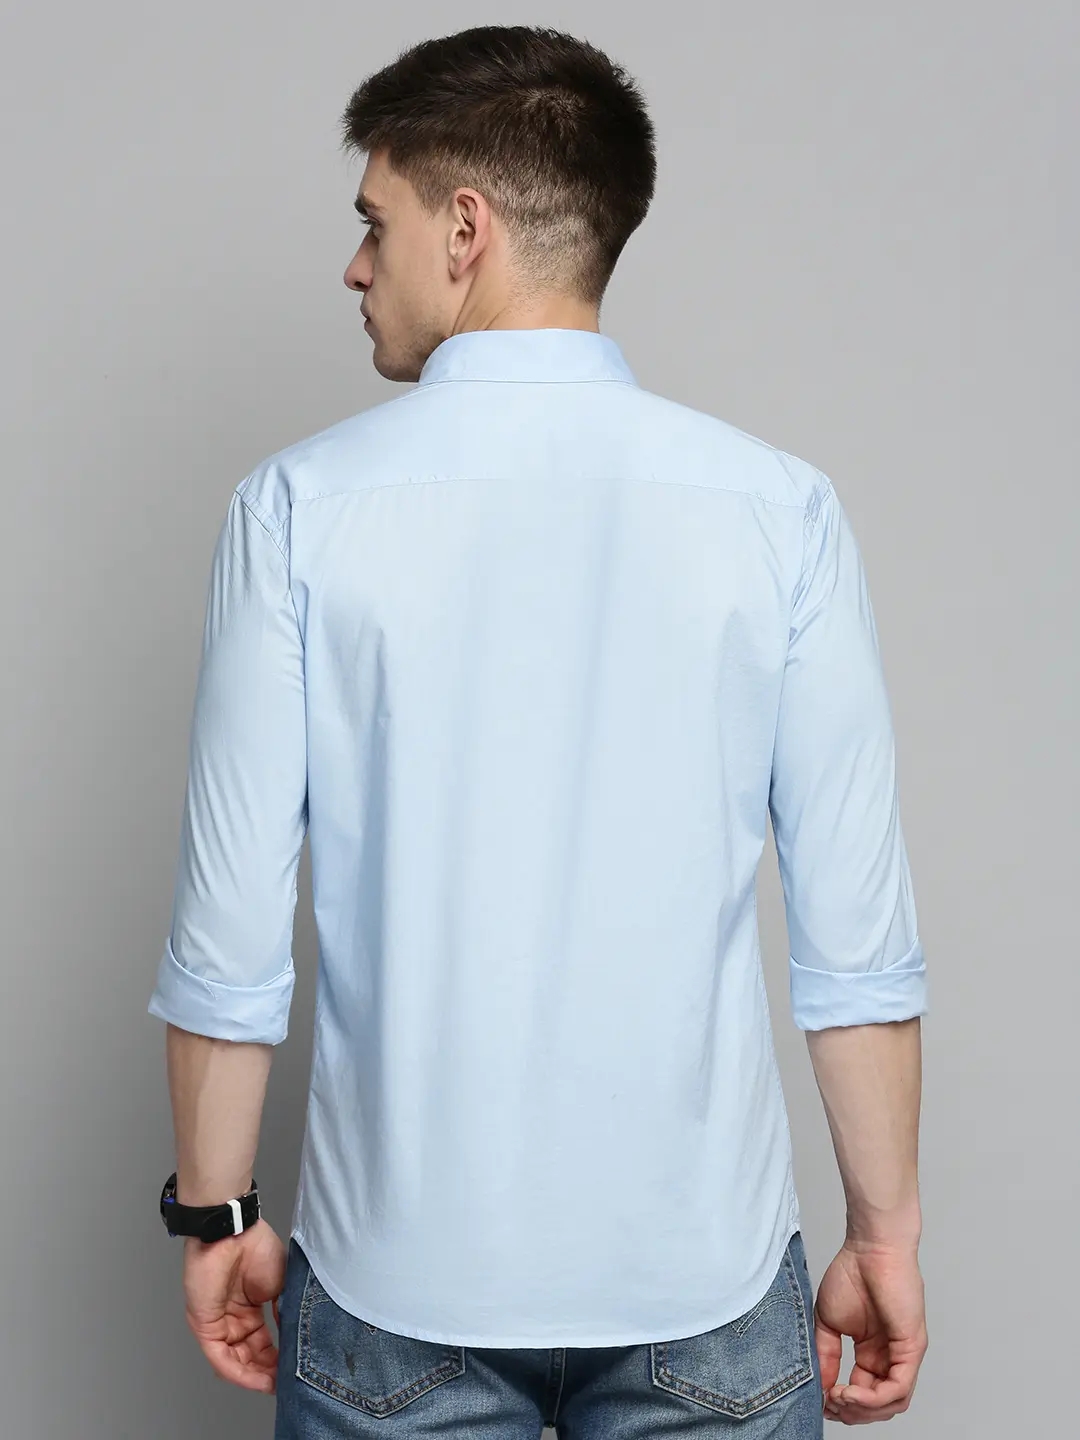 SHOWOFF Men's Spread Collar Blue Self Design Shirt